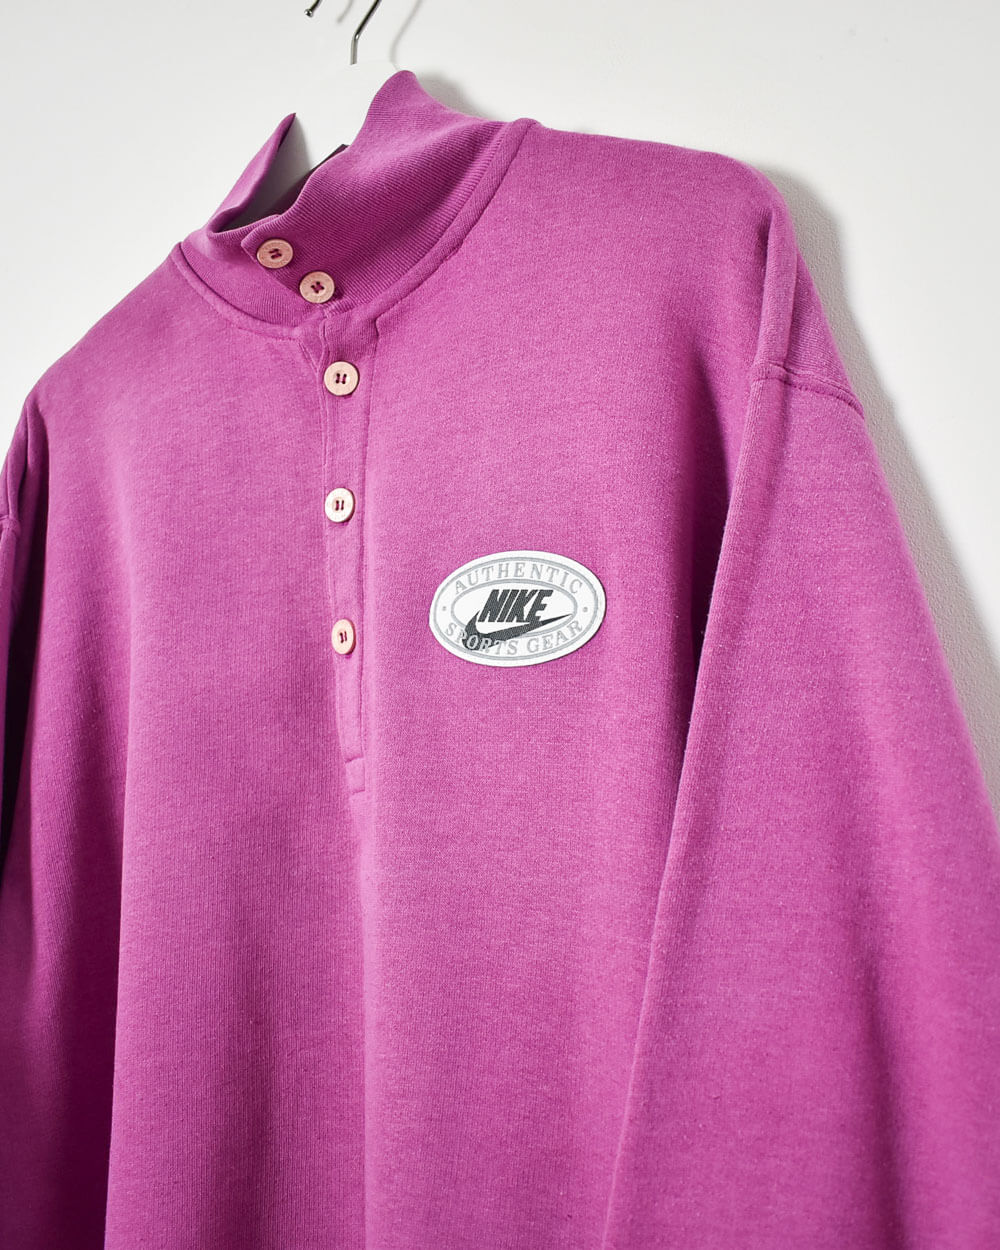 Purple Nike Authentic Sports Gear Sweatshirt - Medium